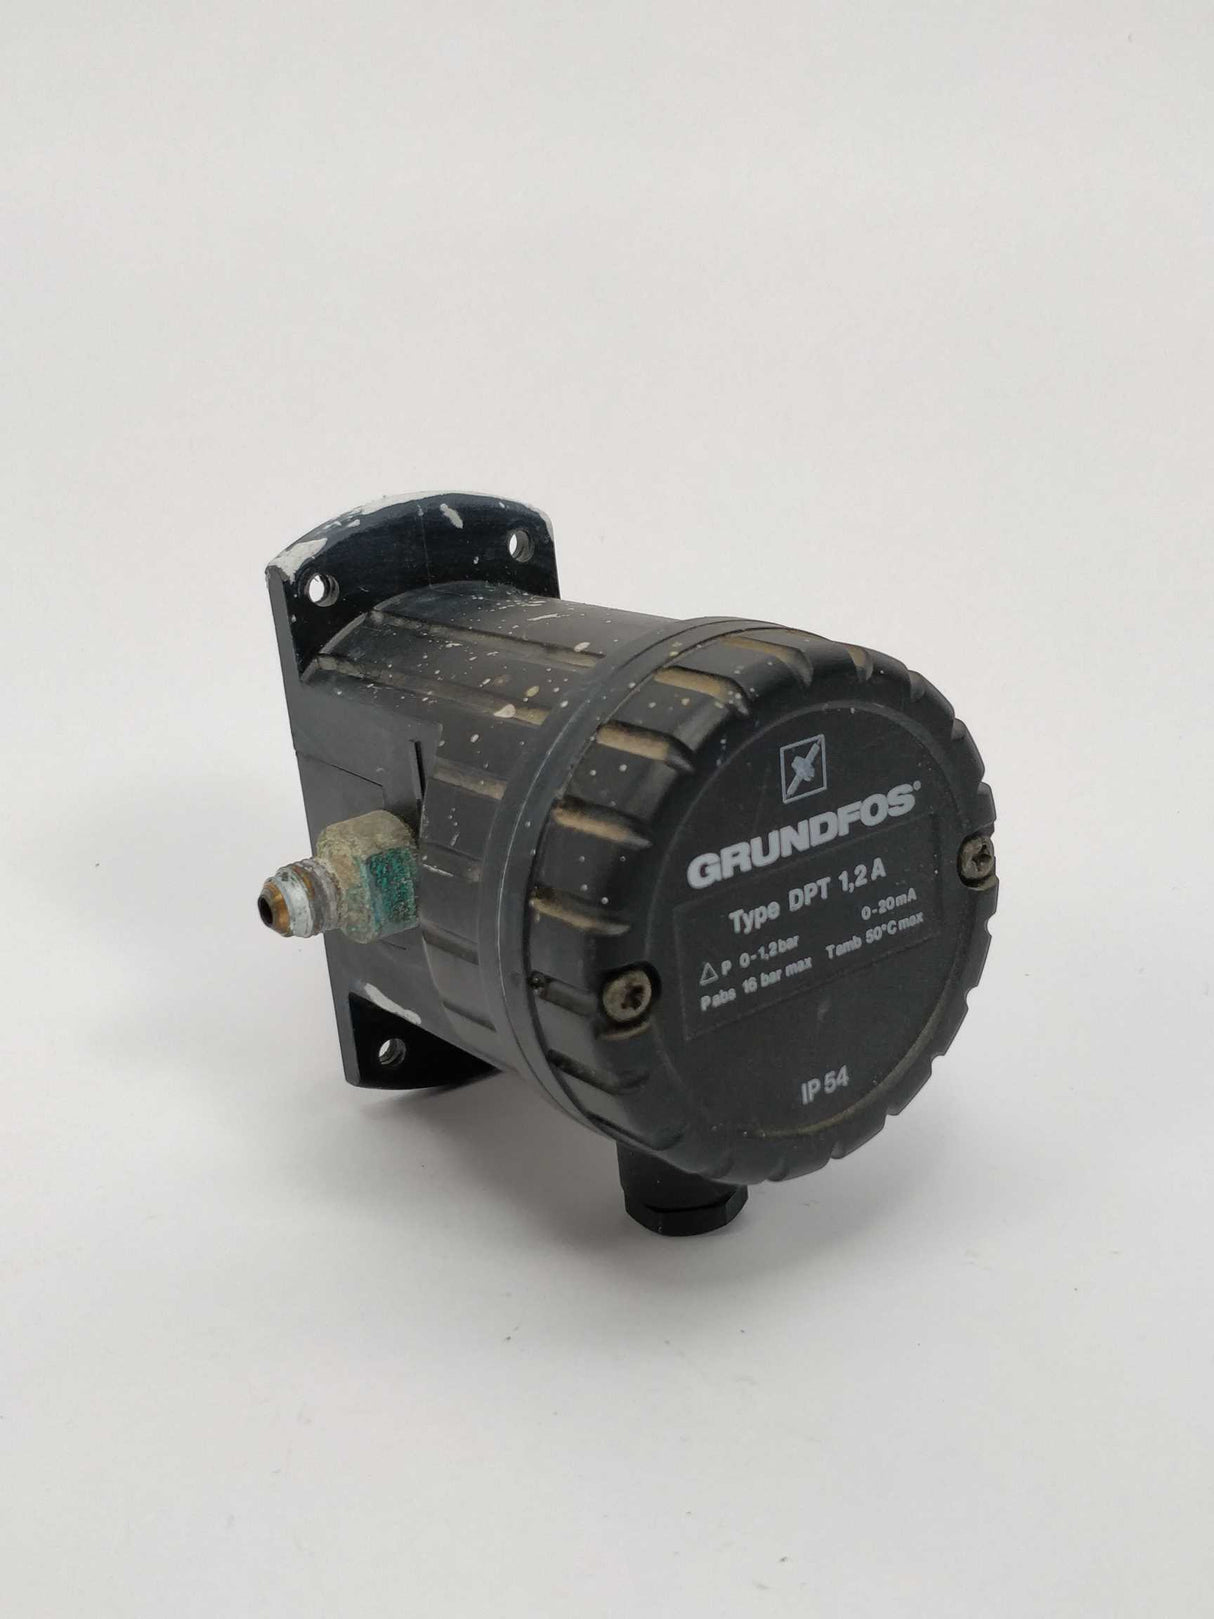 GRUNDFOS DPT 1,2 A Differential Pressure Transmitter